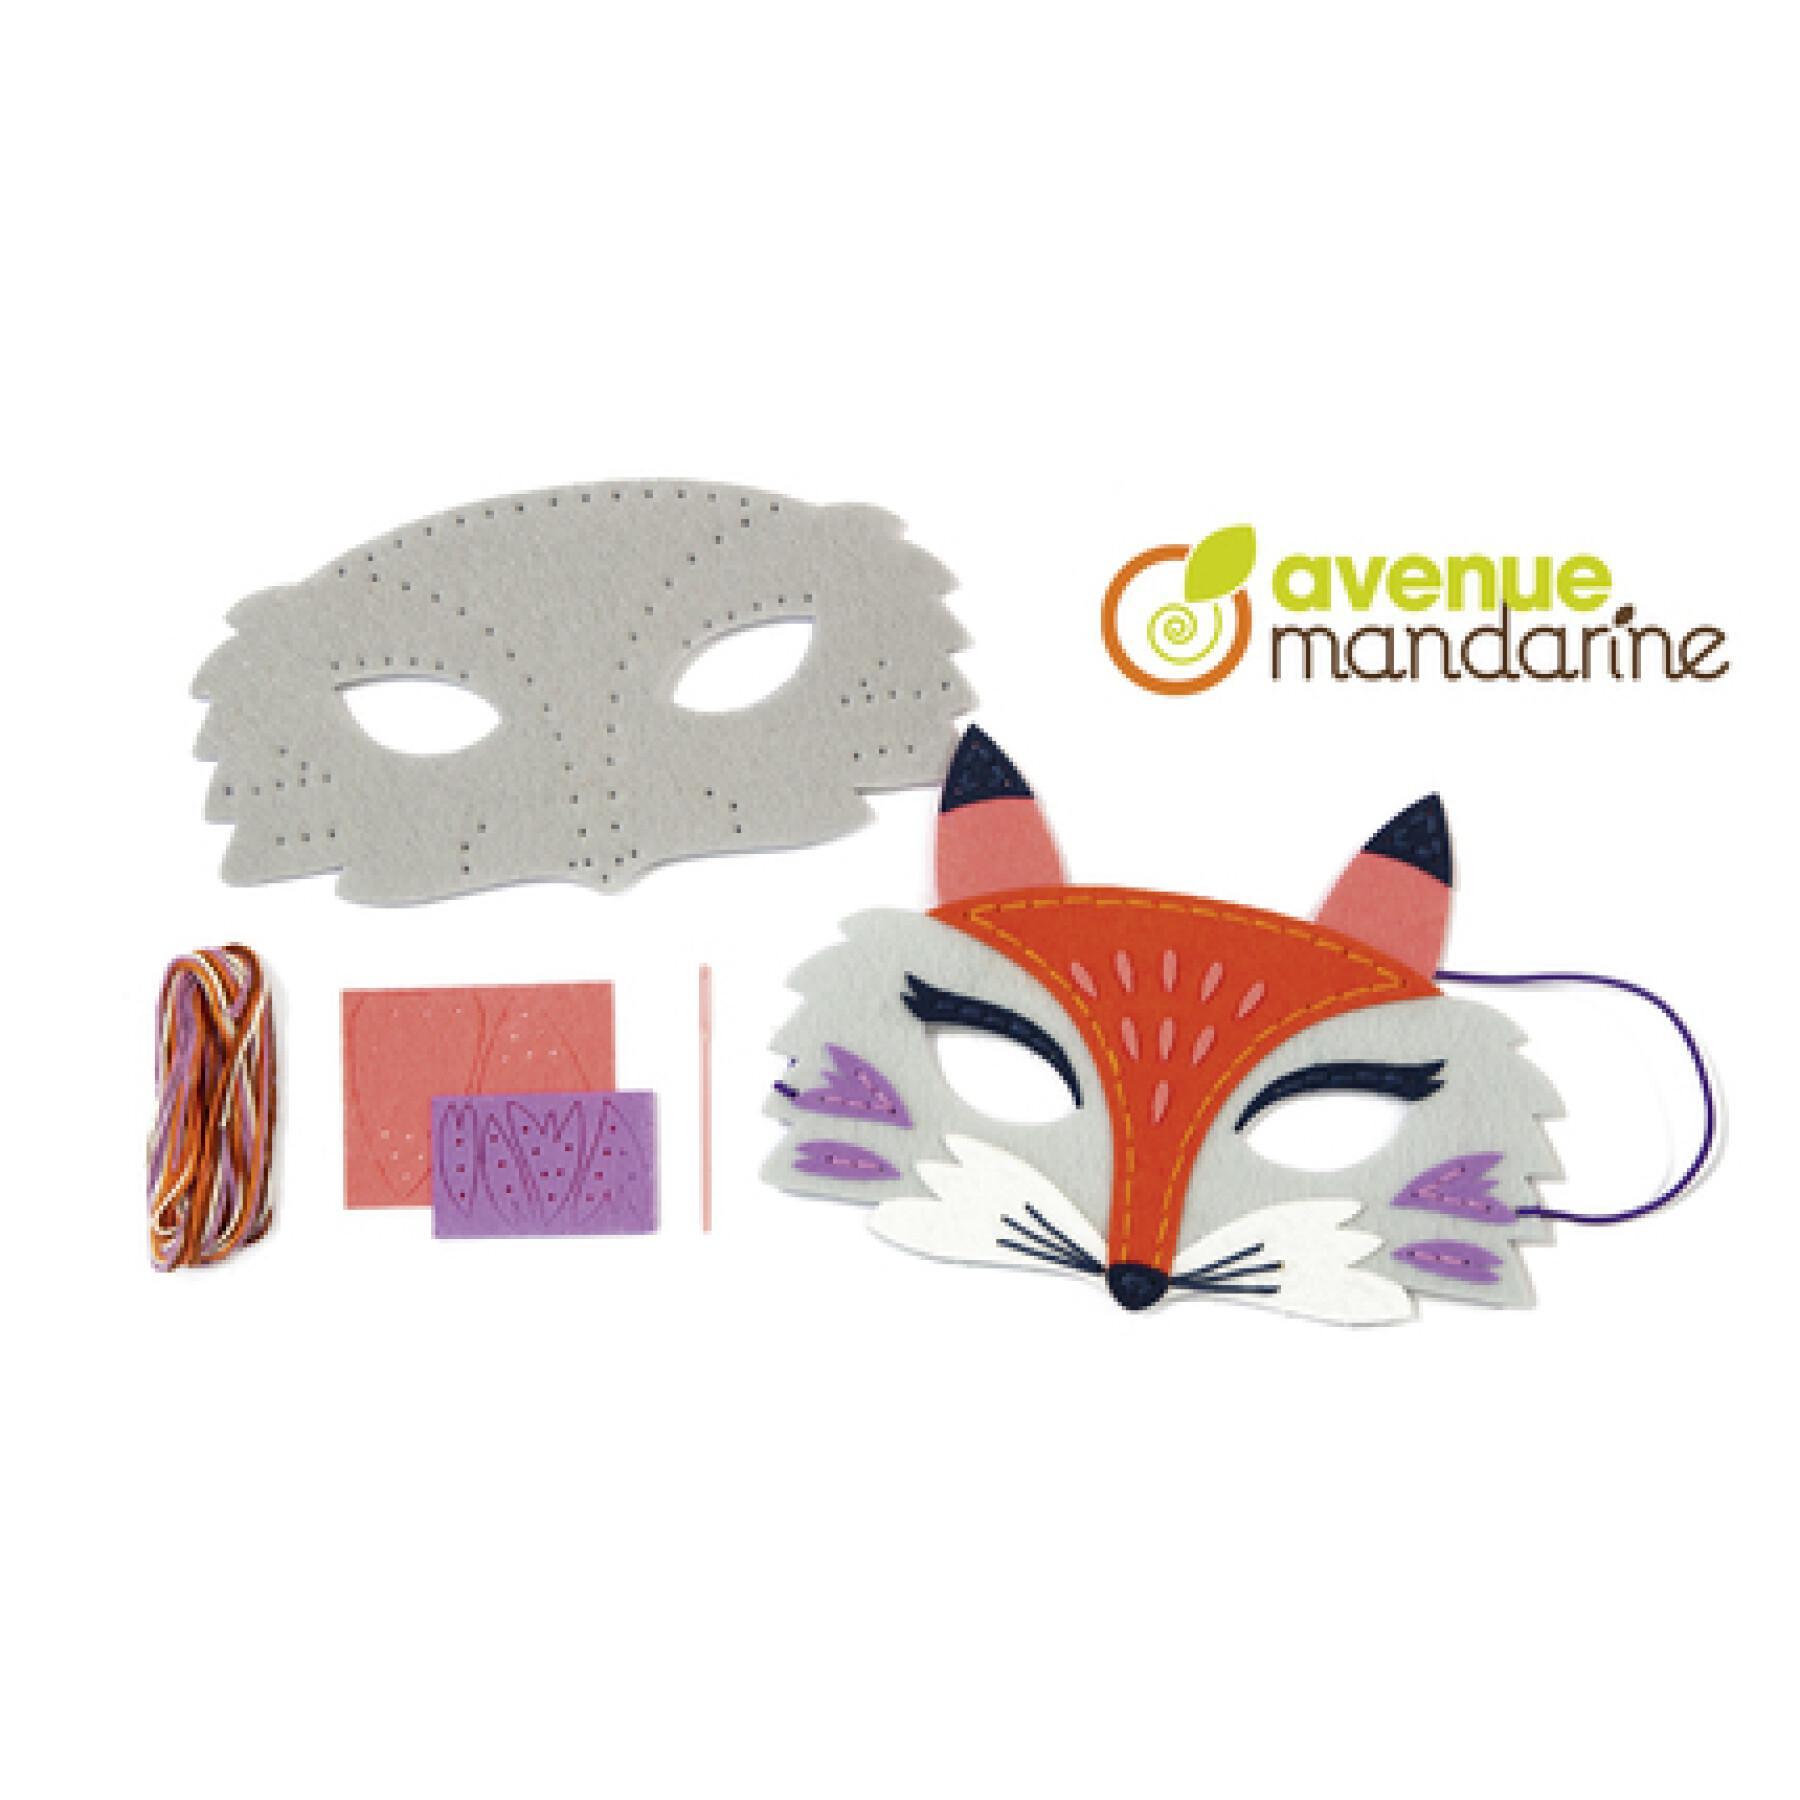 Creative box sewing mask Avenue Mandarine